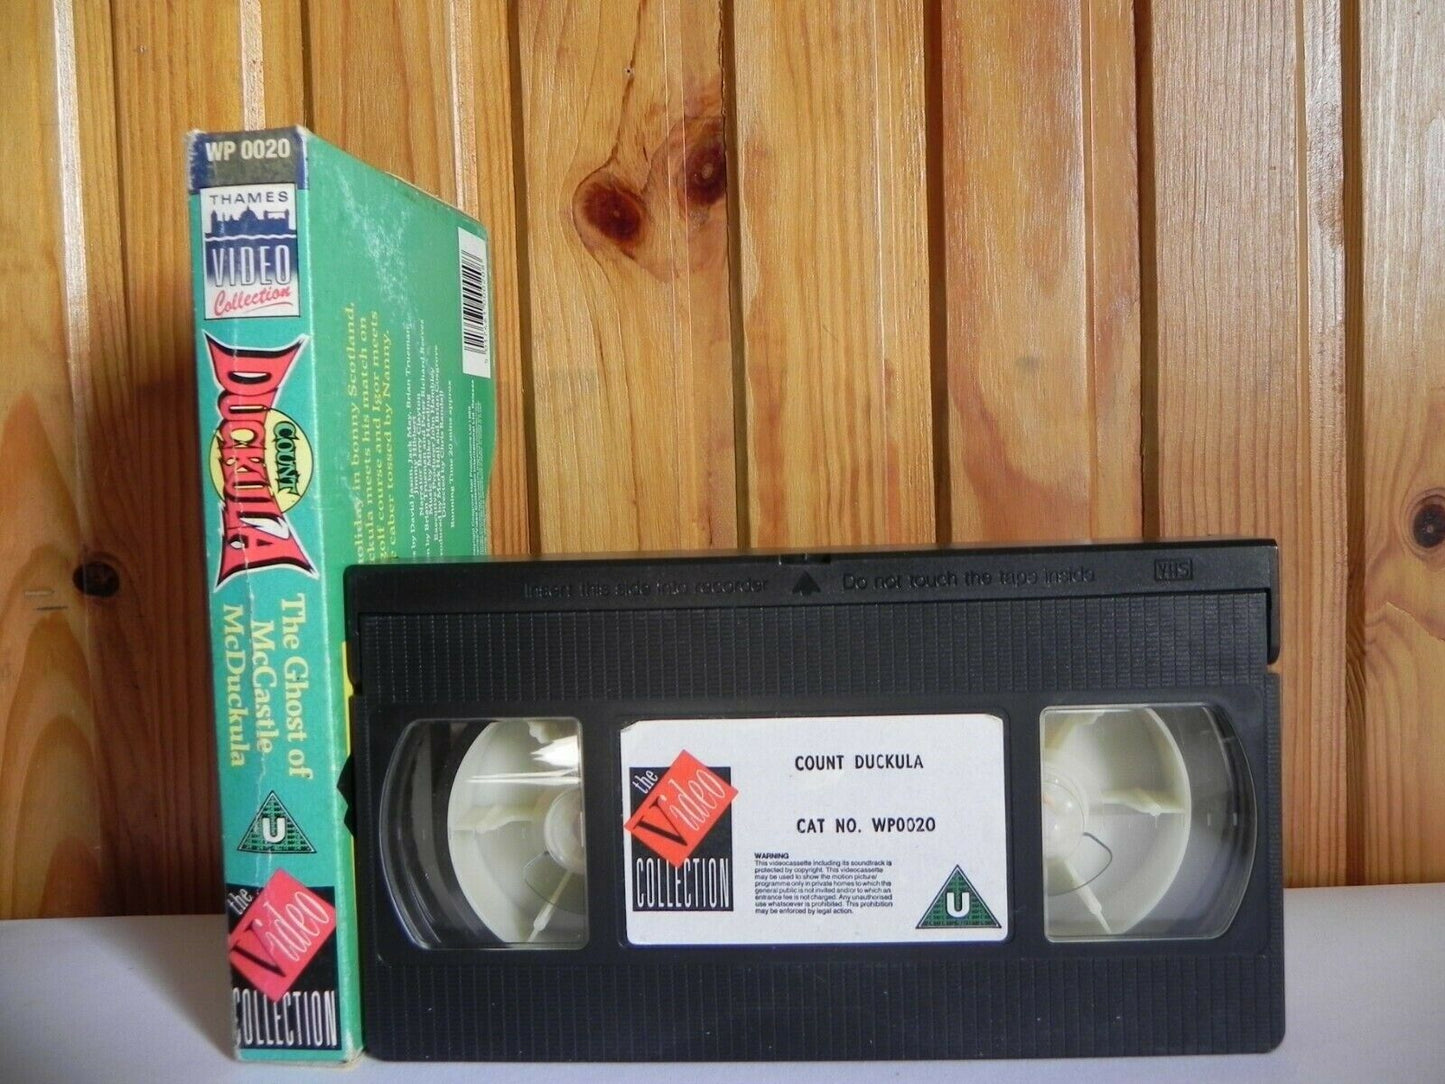 Count Duckula - Thames Video - Carton Box - Animated - Retro 80's - Kids - VHS-